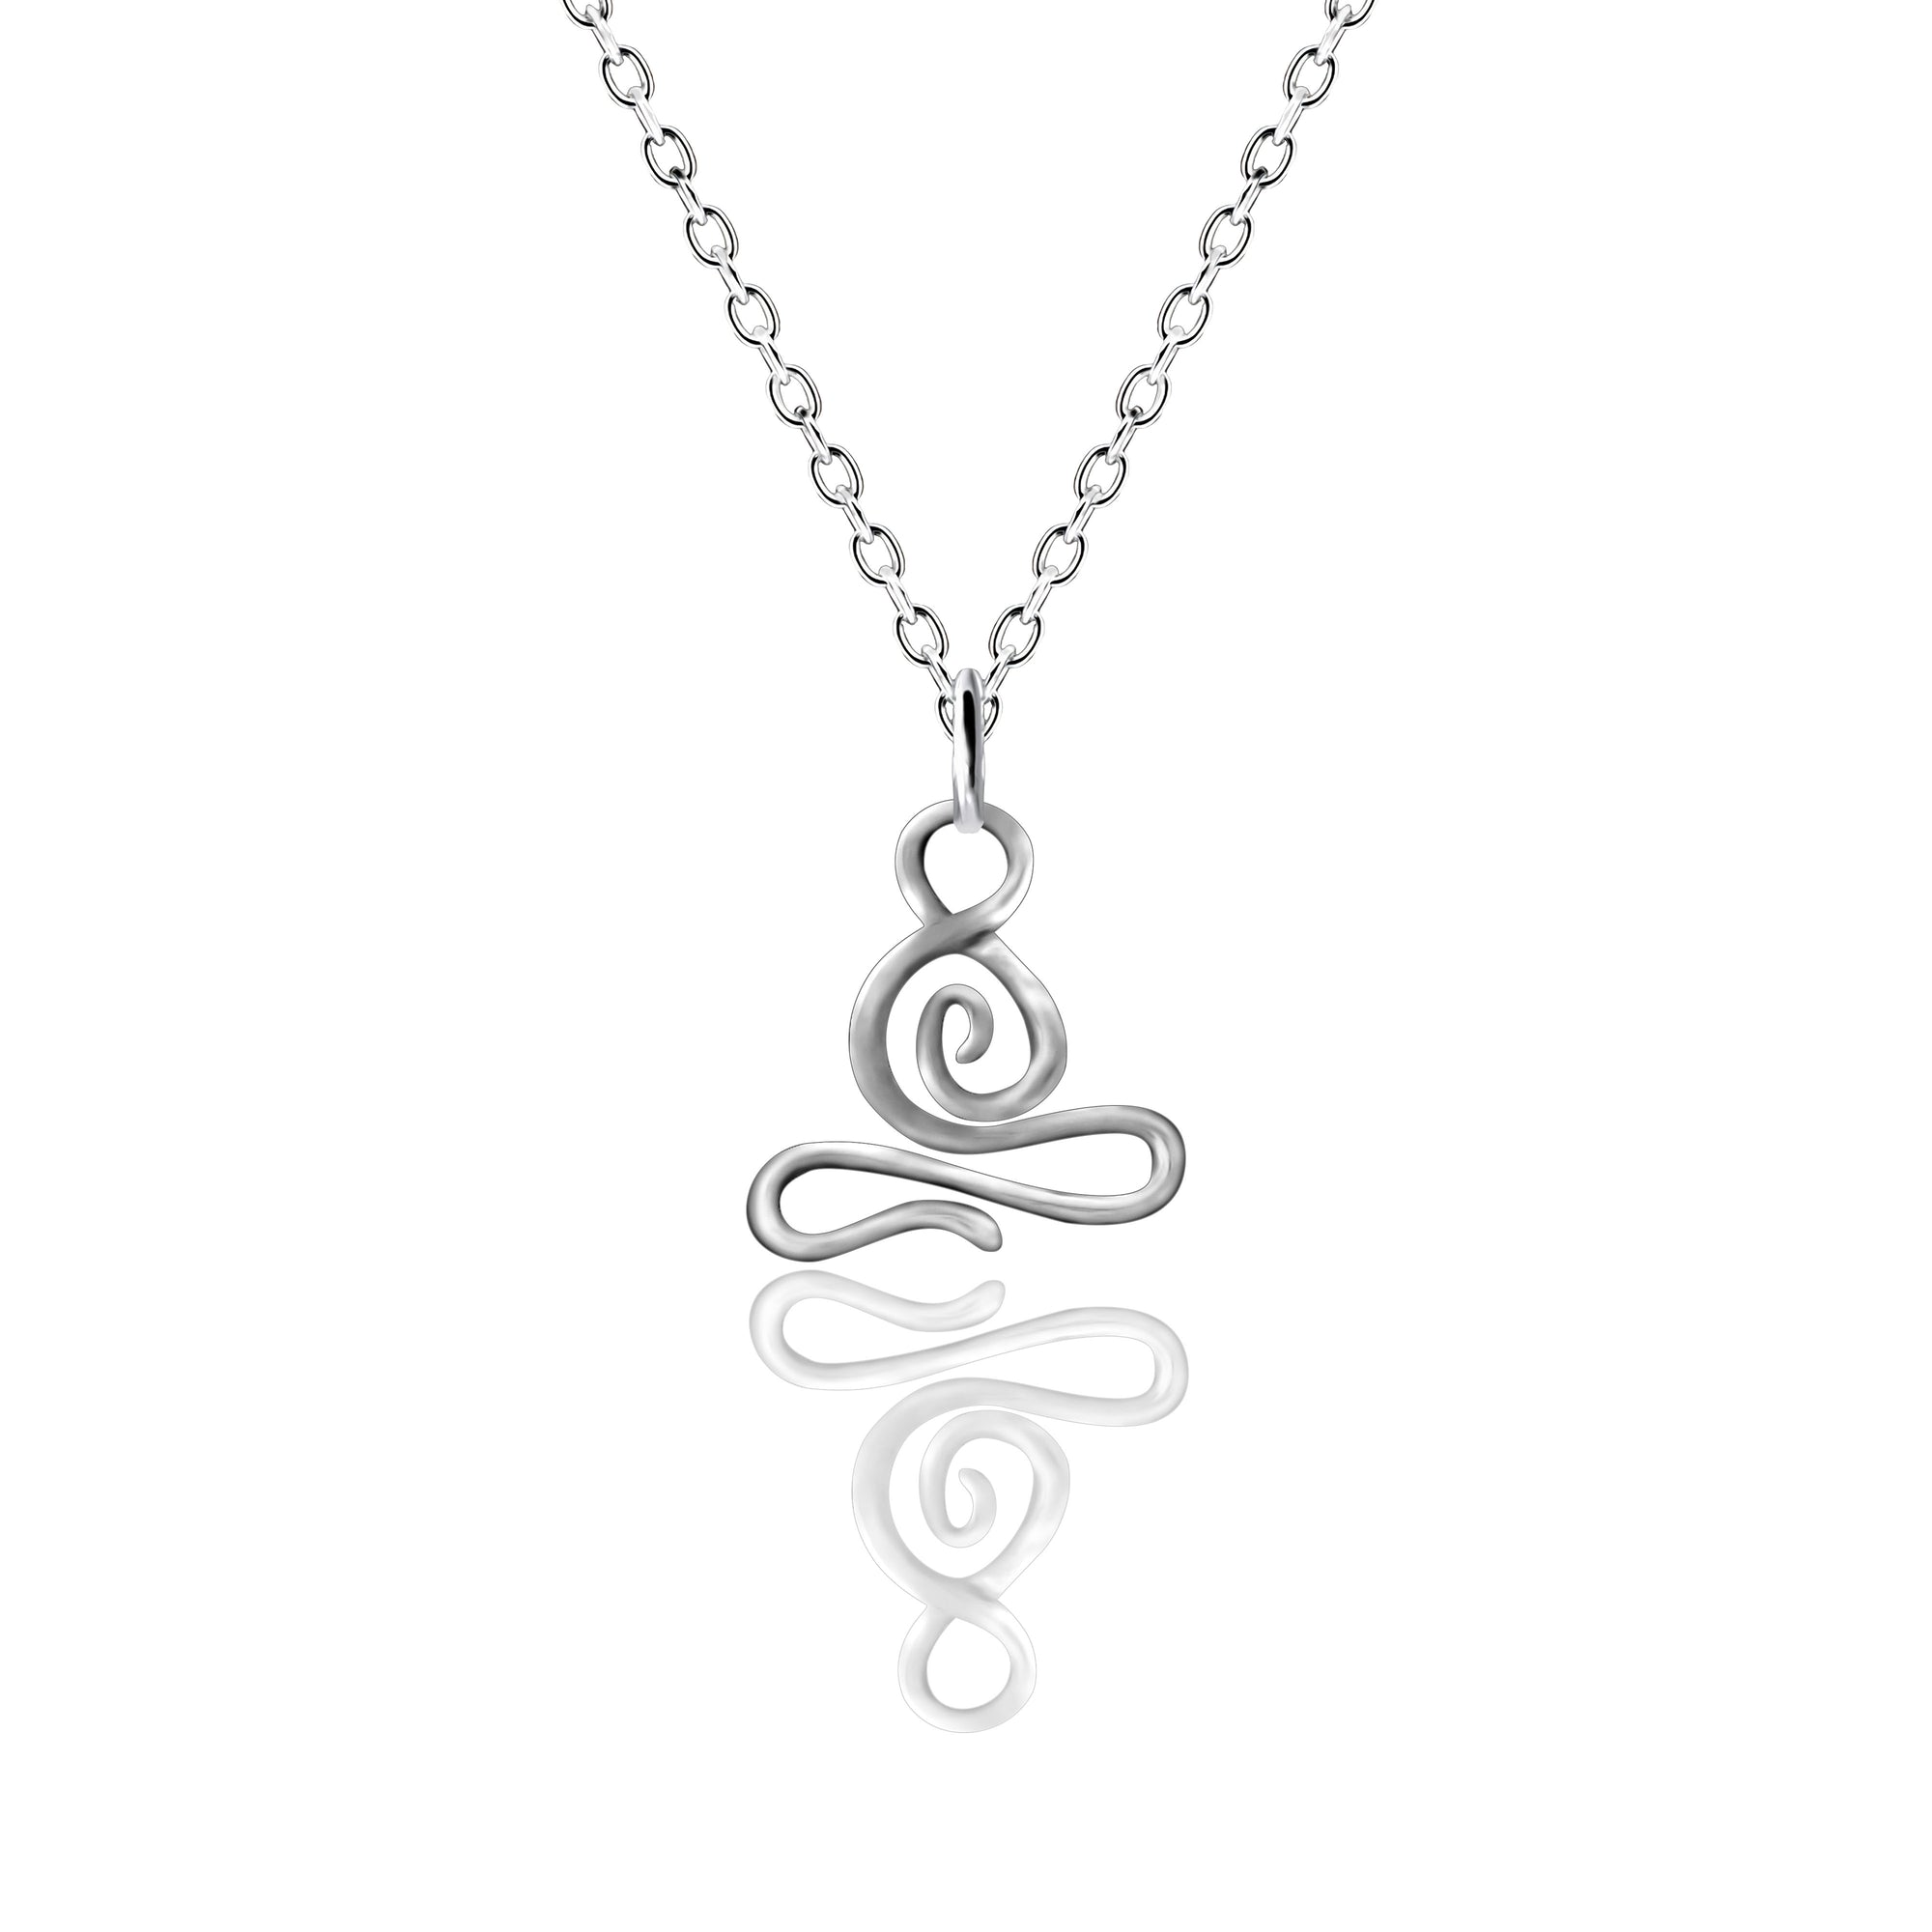 Asana Lotus Yoga Buddha Necklace with Inspirational Quote Card, Yoga Hindu Spiritual Amulet Jewelry, Gifts for Women